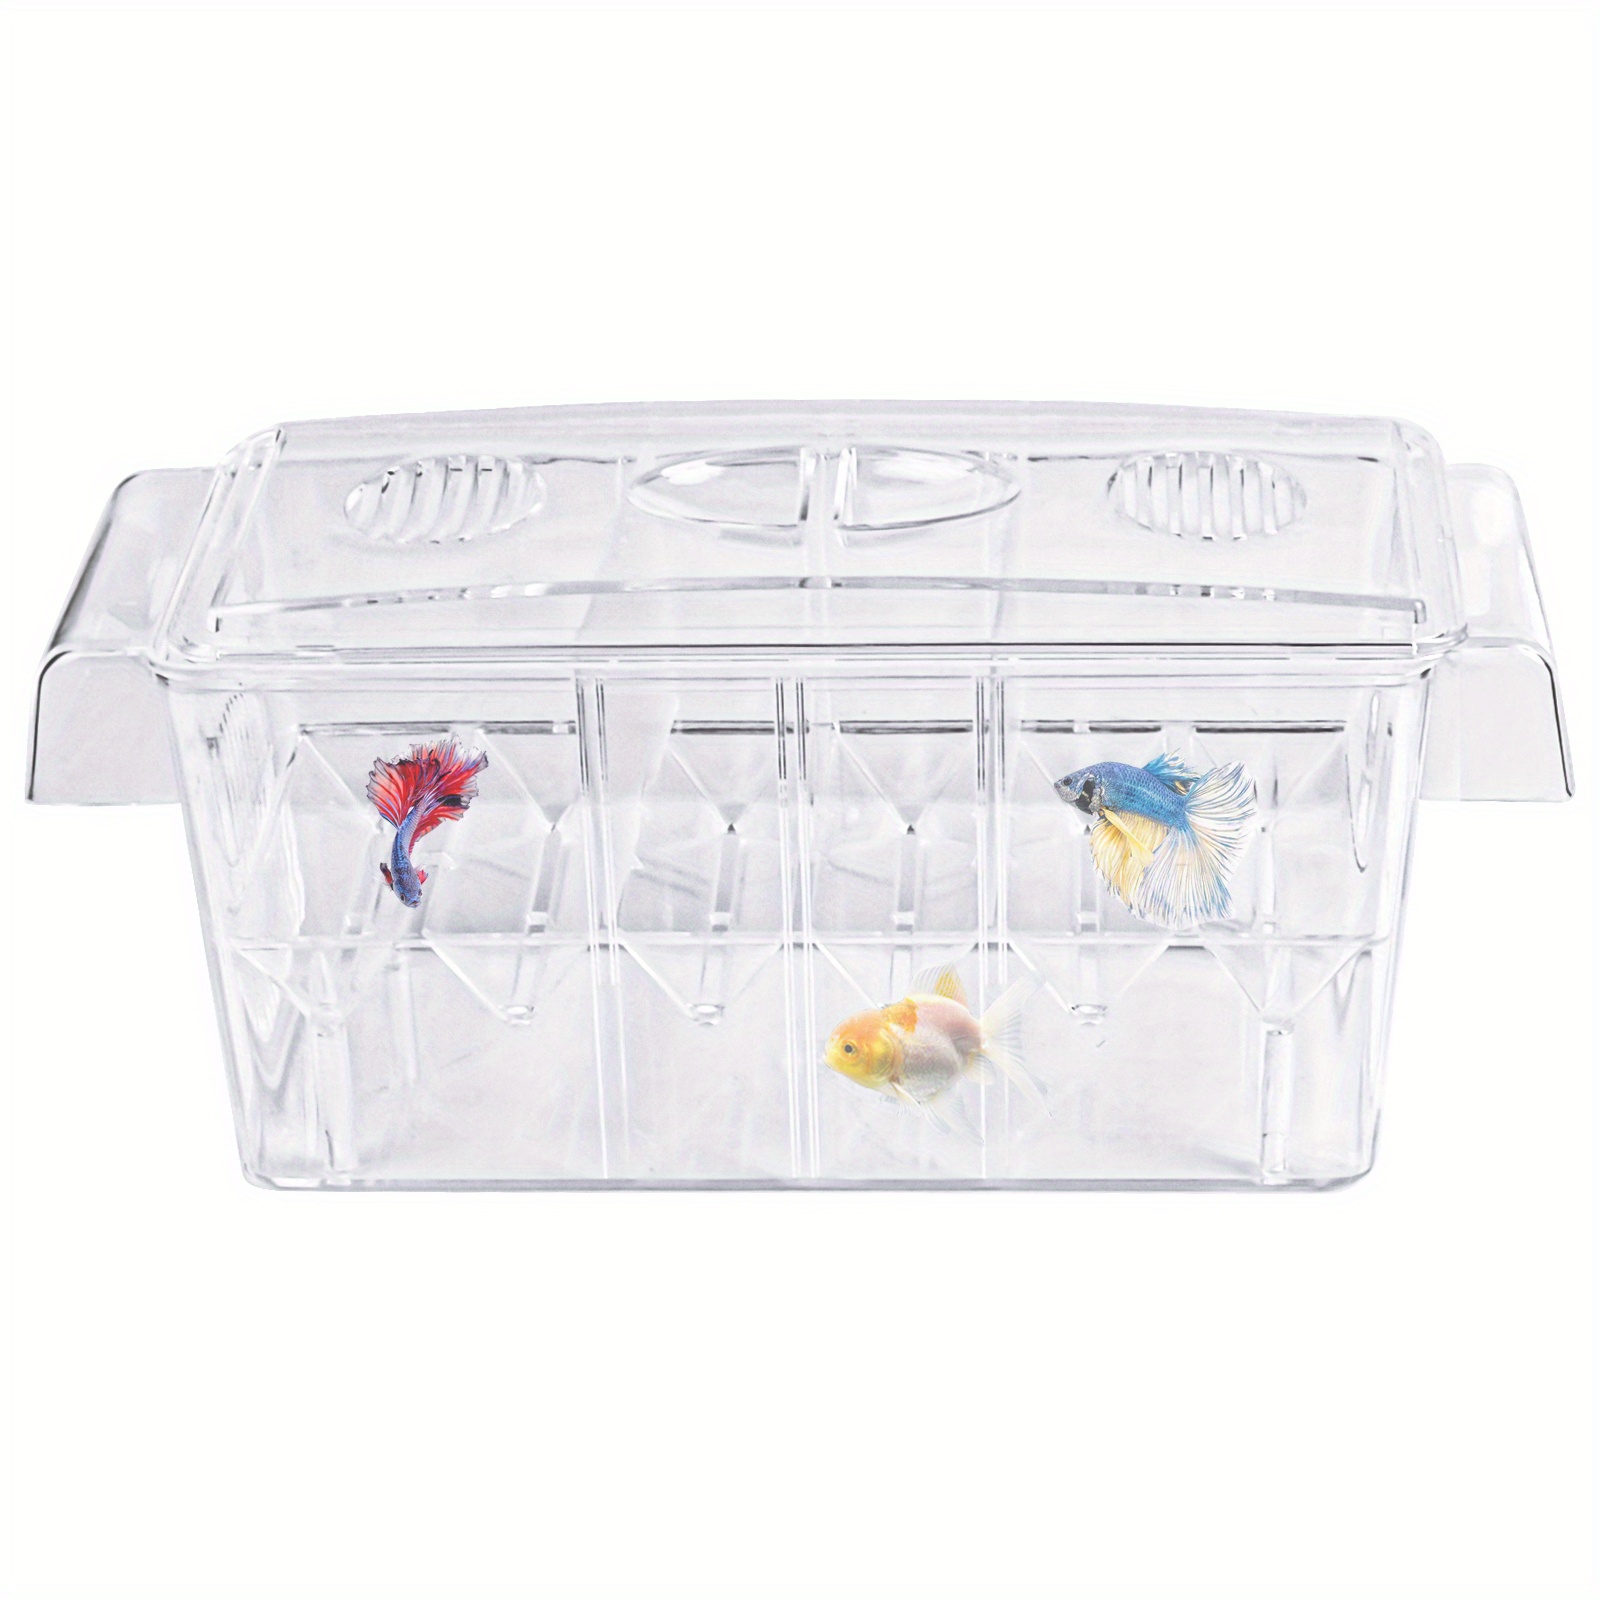 Mini-aquarium, Betta-box, Zuchtbox, Brüterei, Inkubator